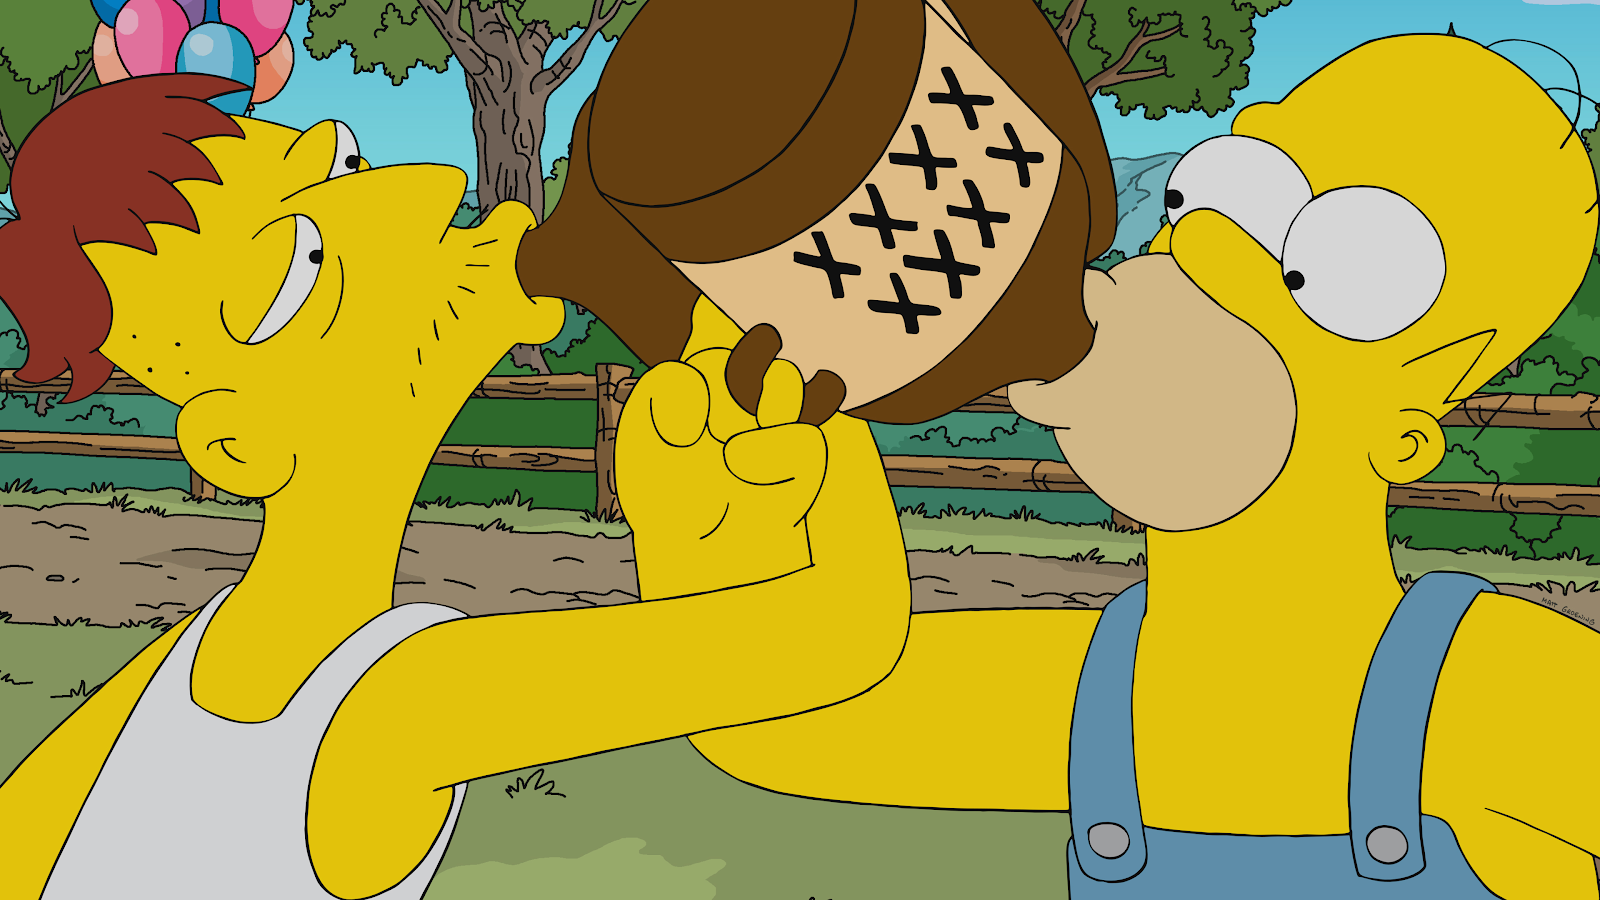 TV Recap: "The Simpsons" Season 31, Episode 18 - "The Incred...